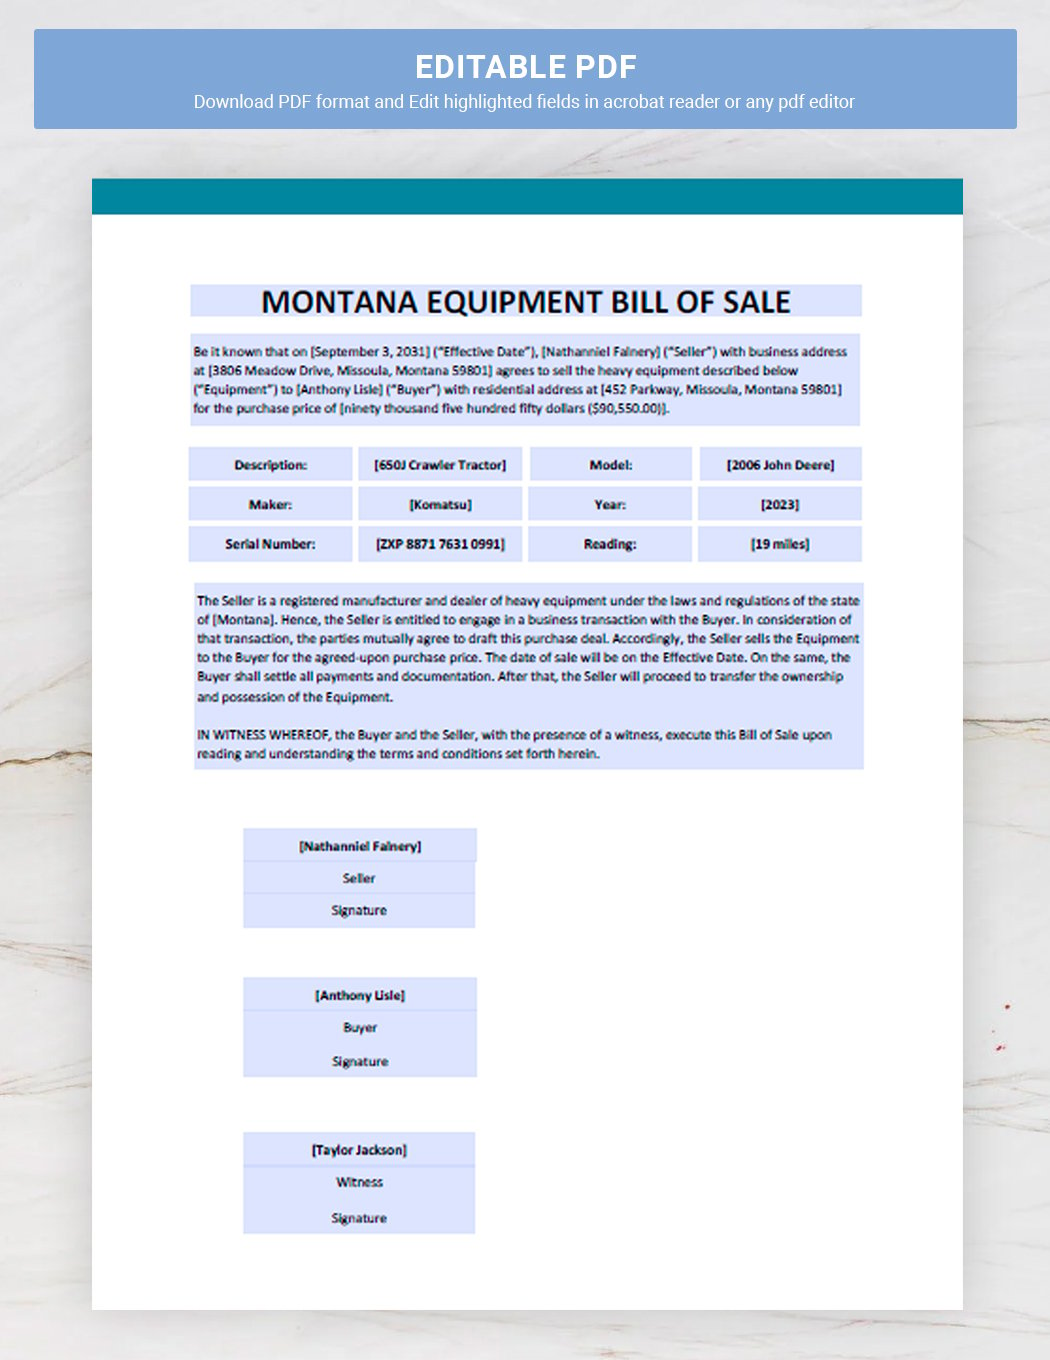 Montana Equipment Bill of Sale Template